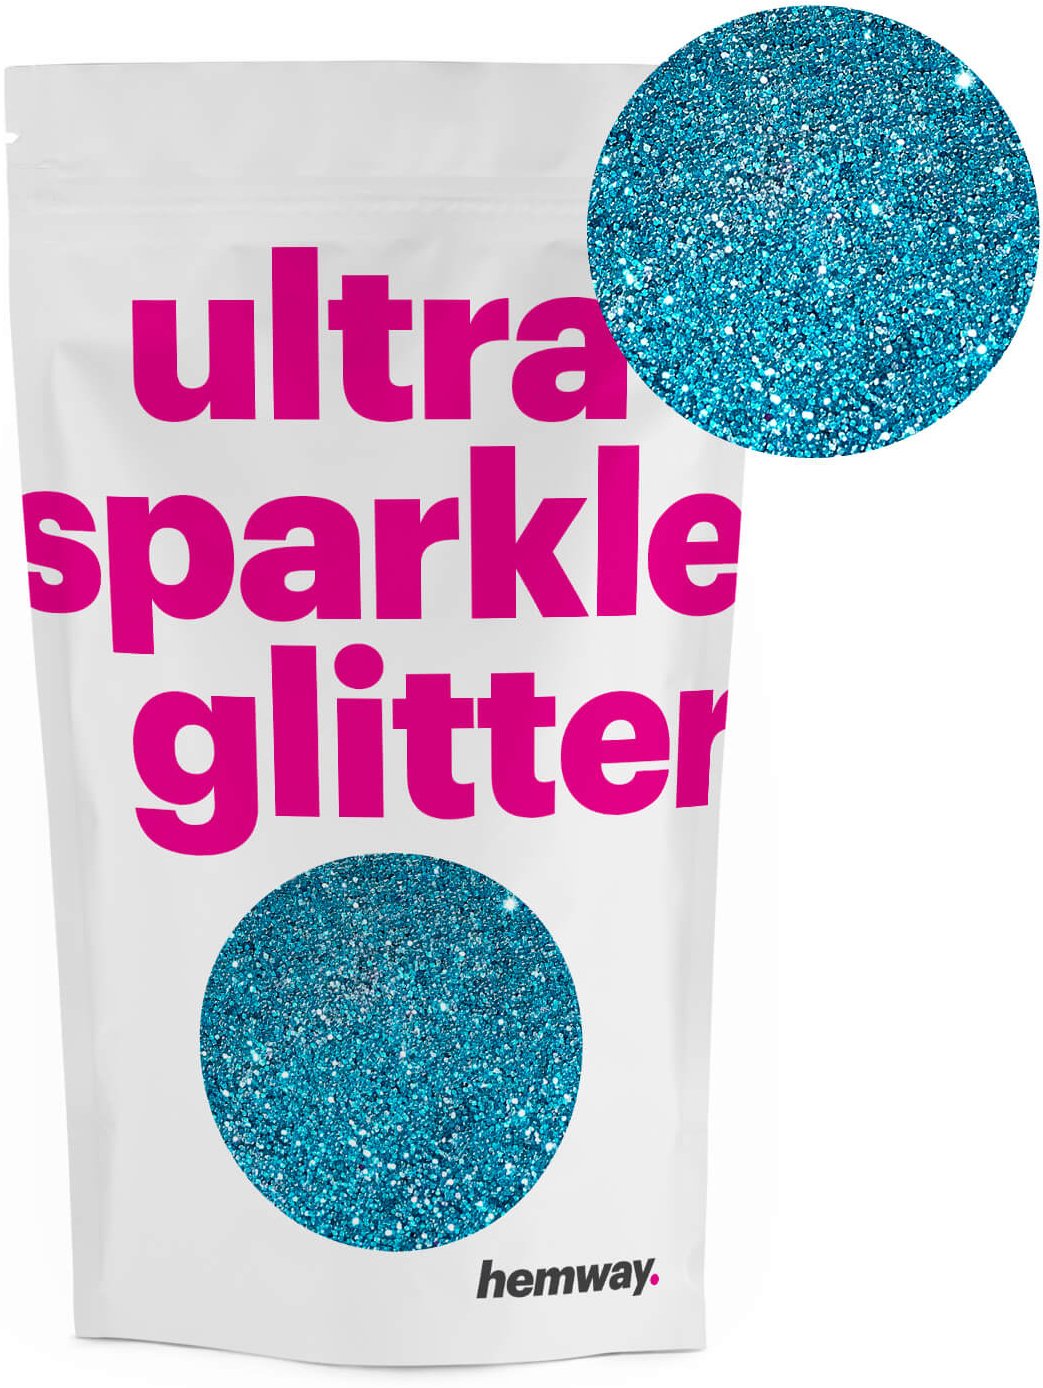 Ultra sparkle glitter